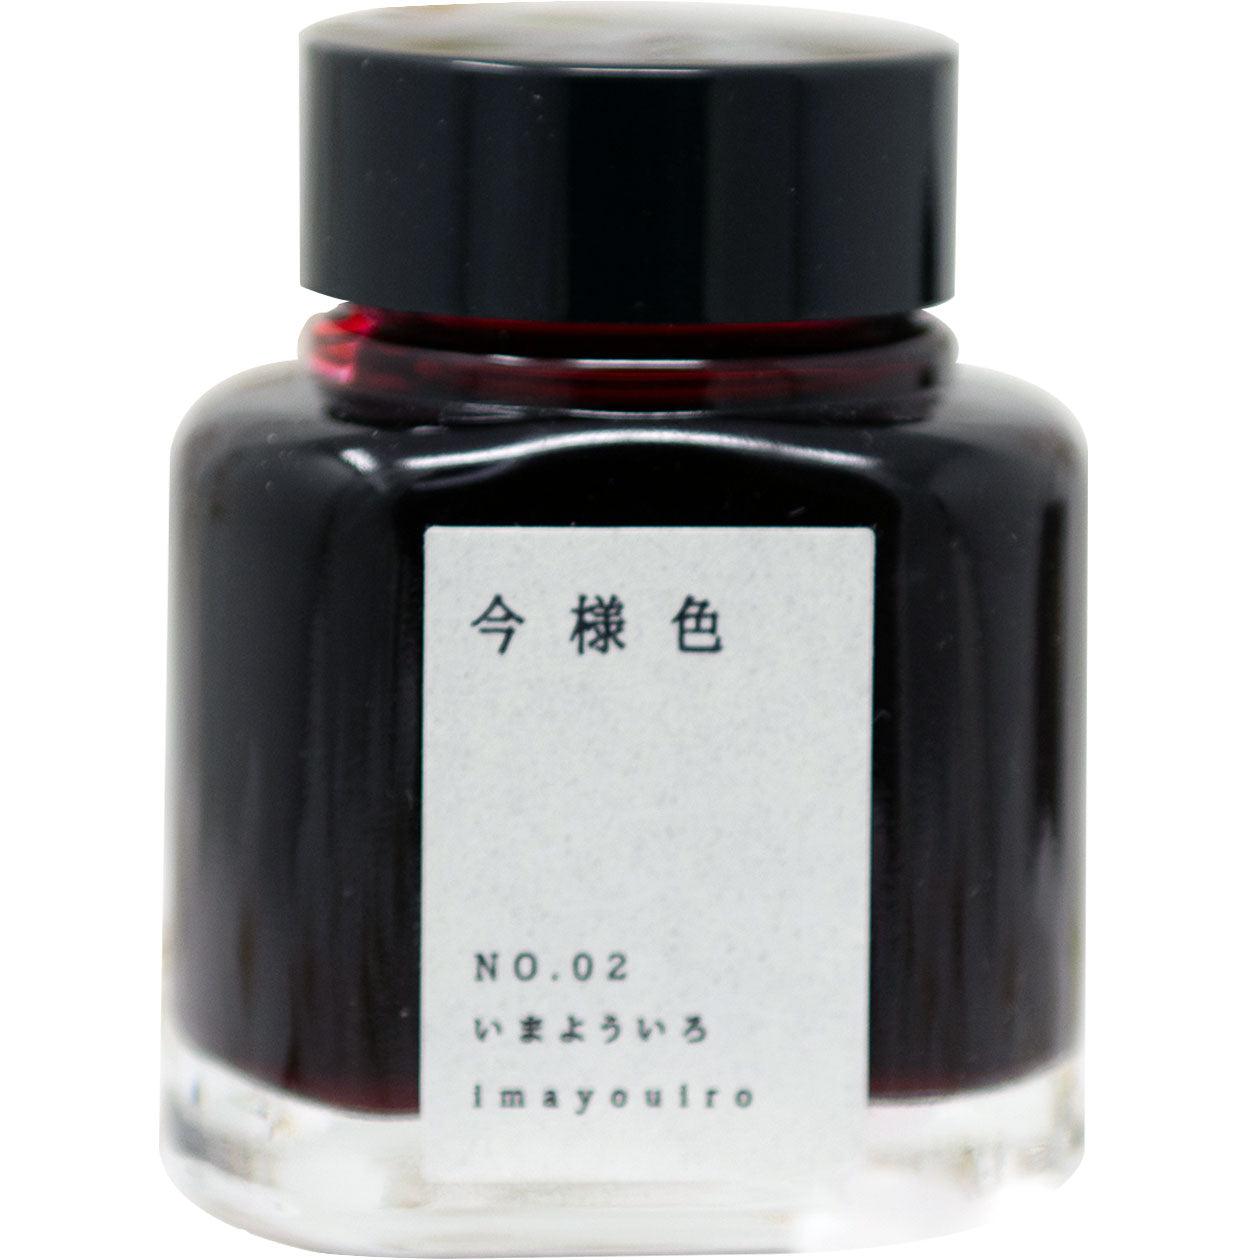 Kyoto Ink Bottle - Kyo no Oto - Imayouiro - Pen Boutique Ltd